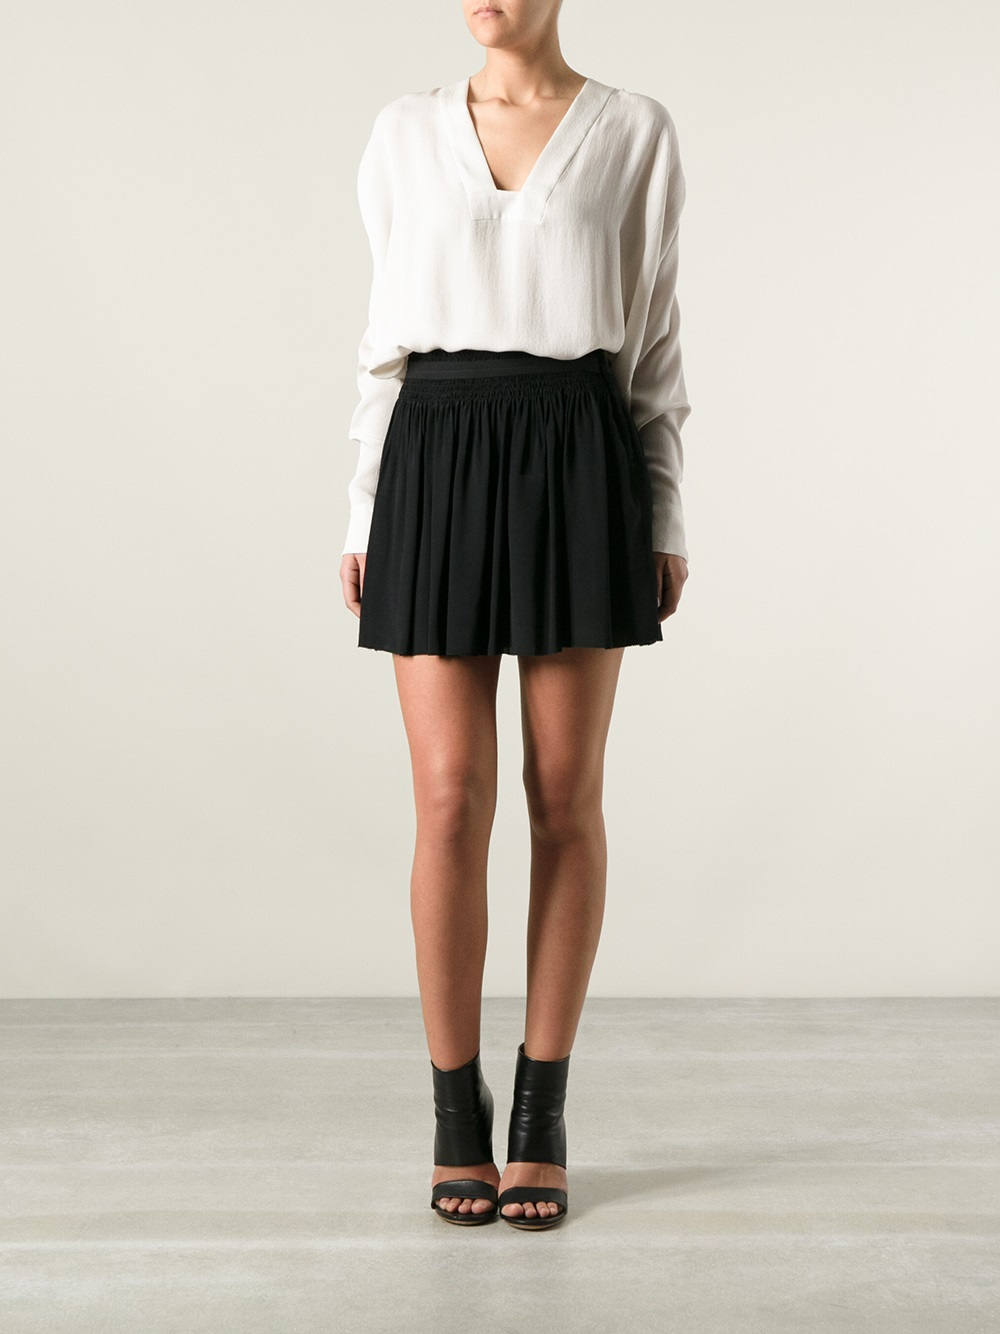 Lyst - Vanessa Bruno Pleated Short Skirt in Black